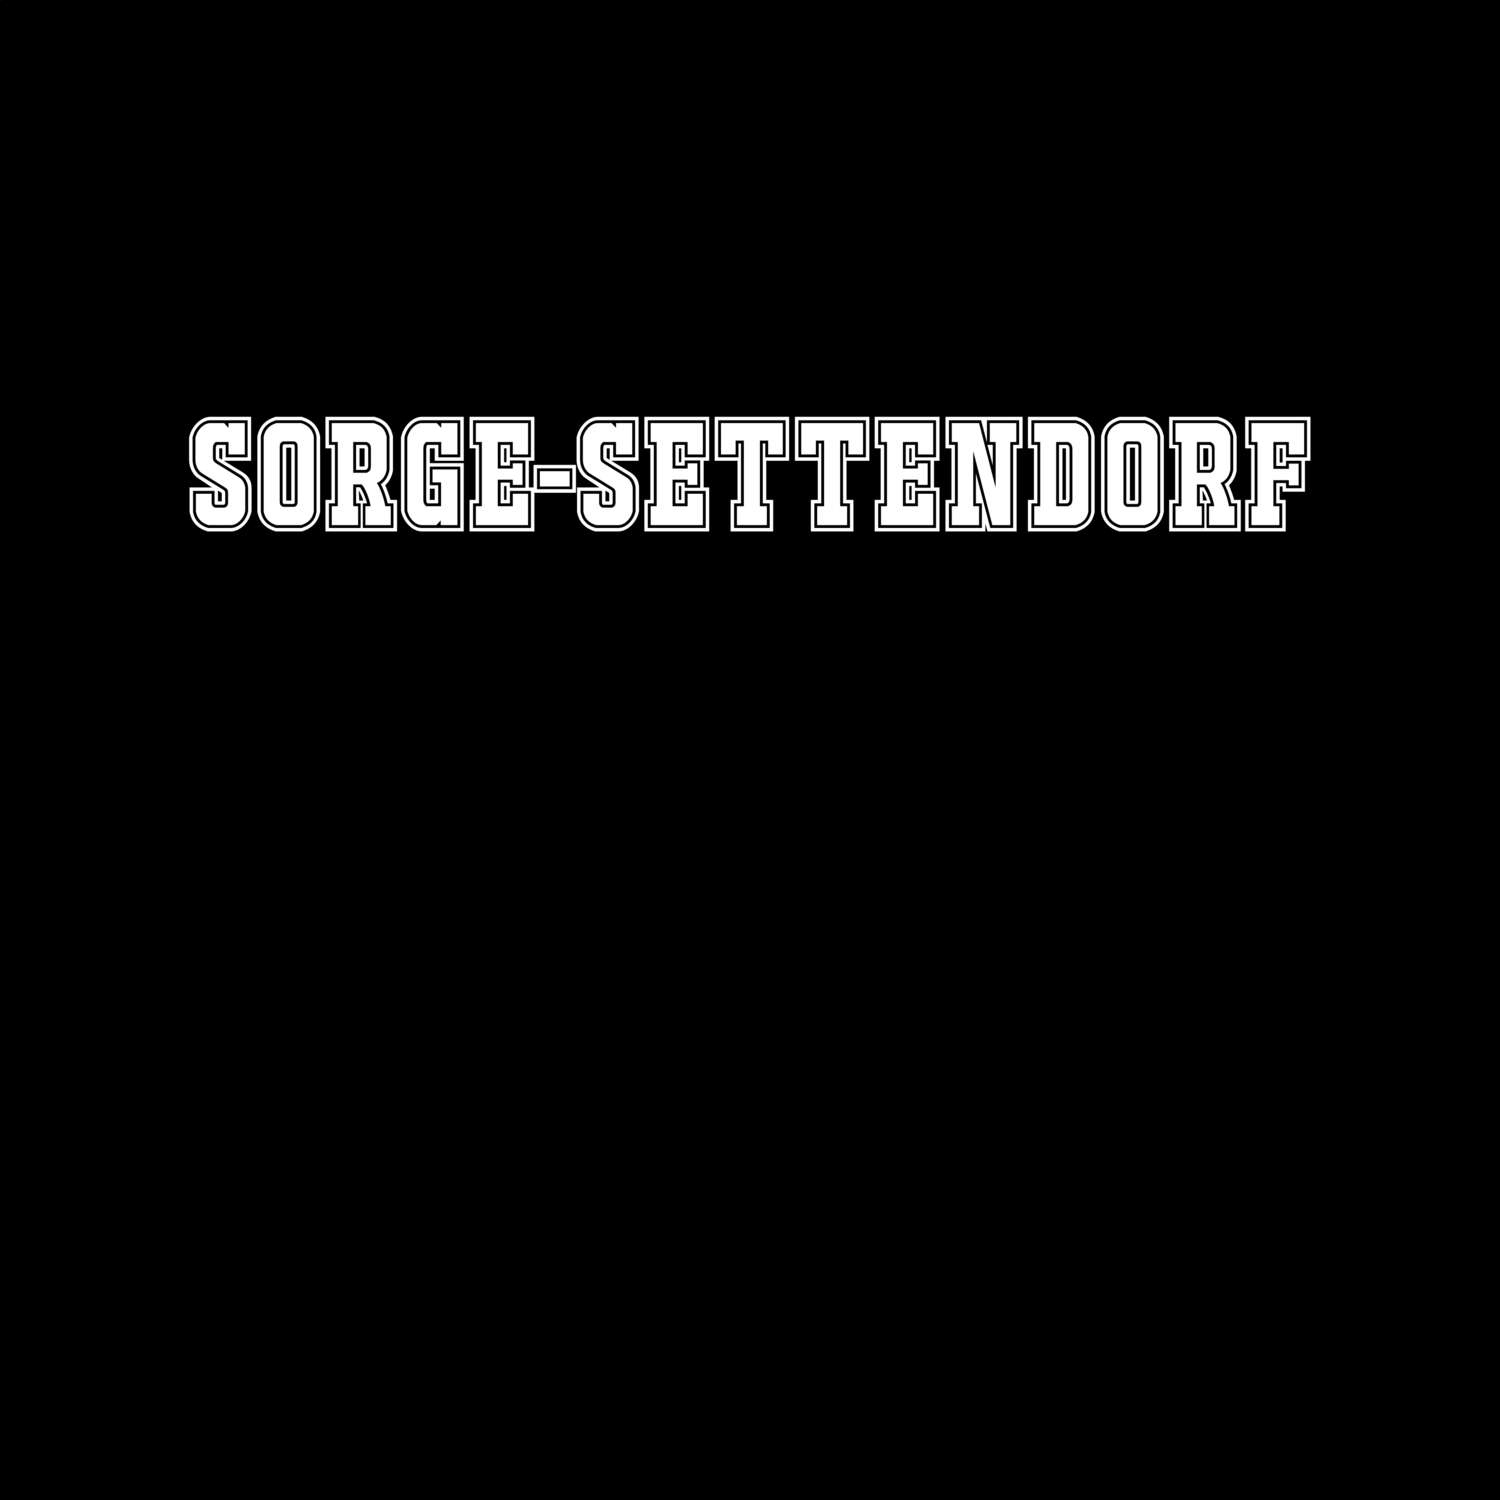 Sorge-Settendorf T-Shirt »Classic«